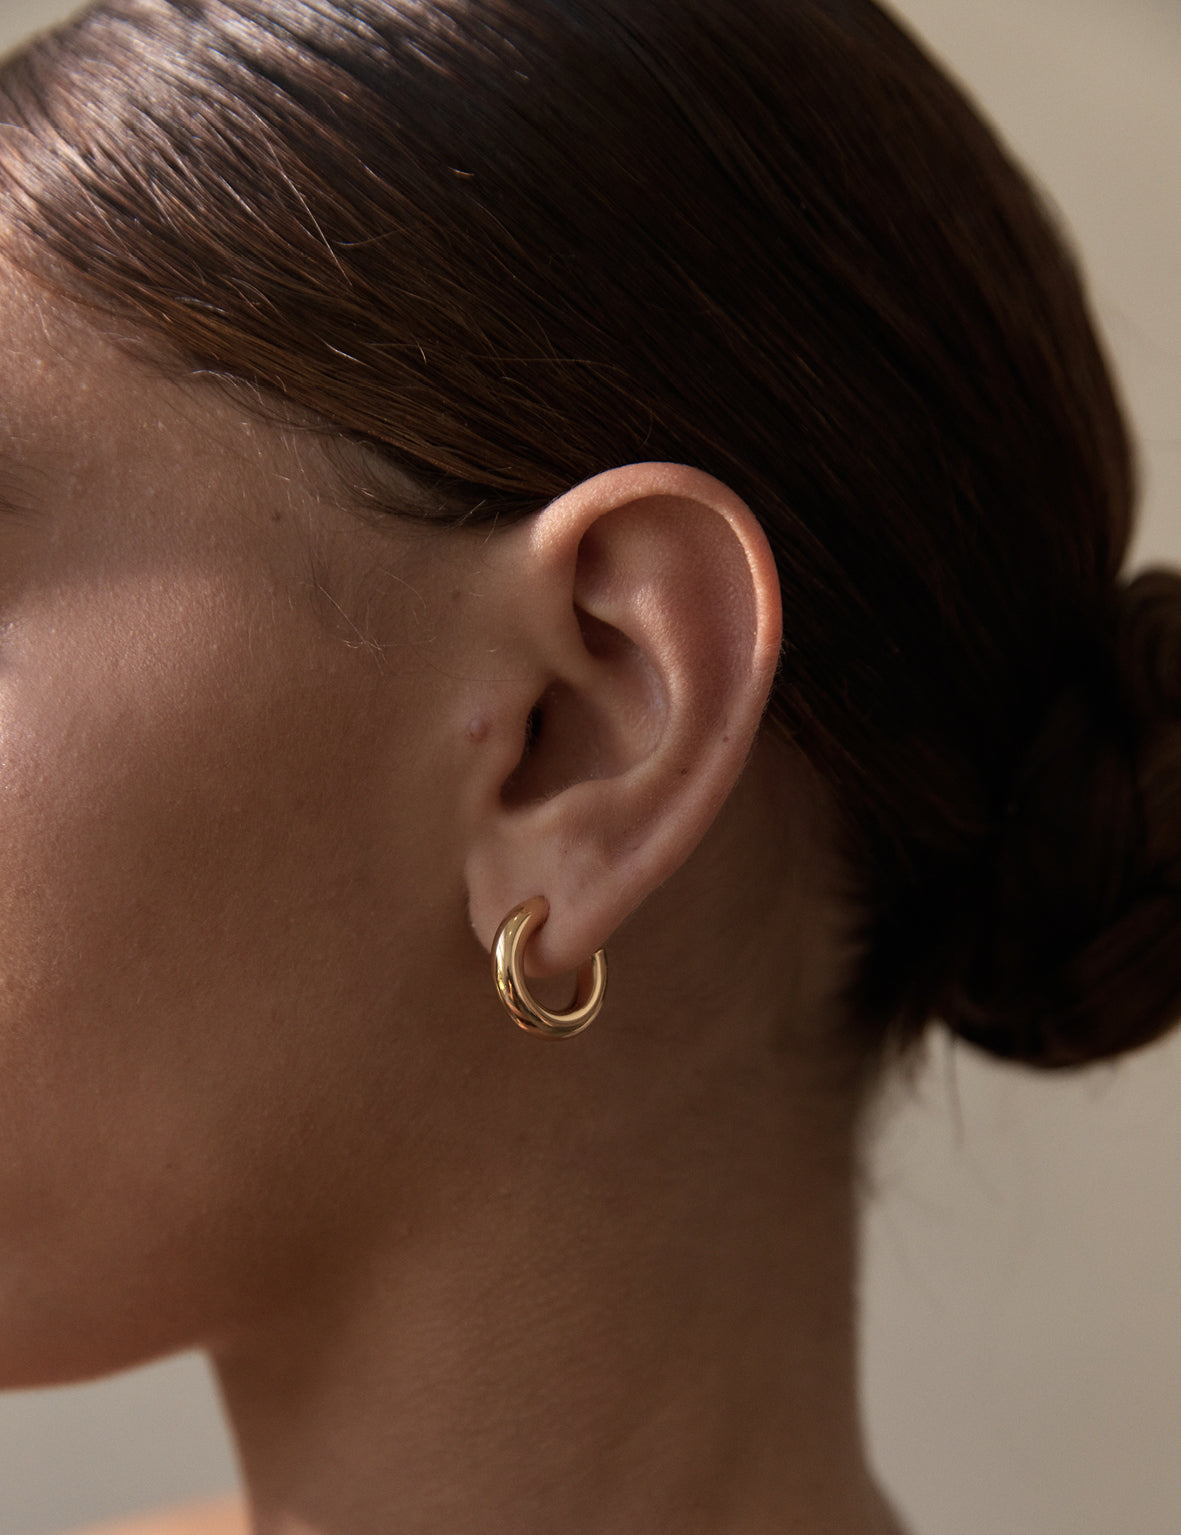 Buy Small Simple Hoop Earrings Online - Accessorize India